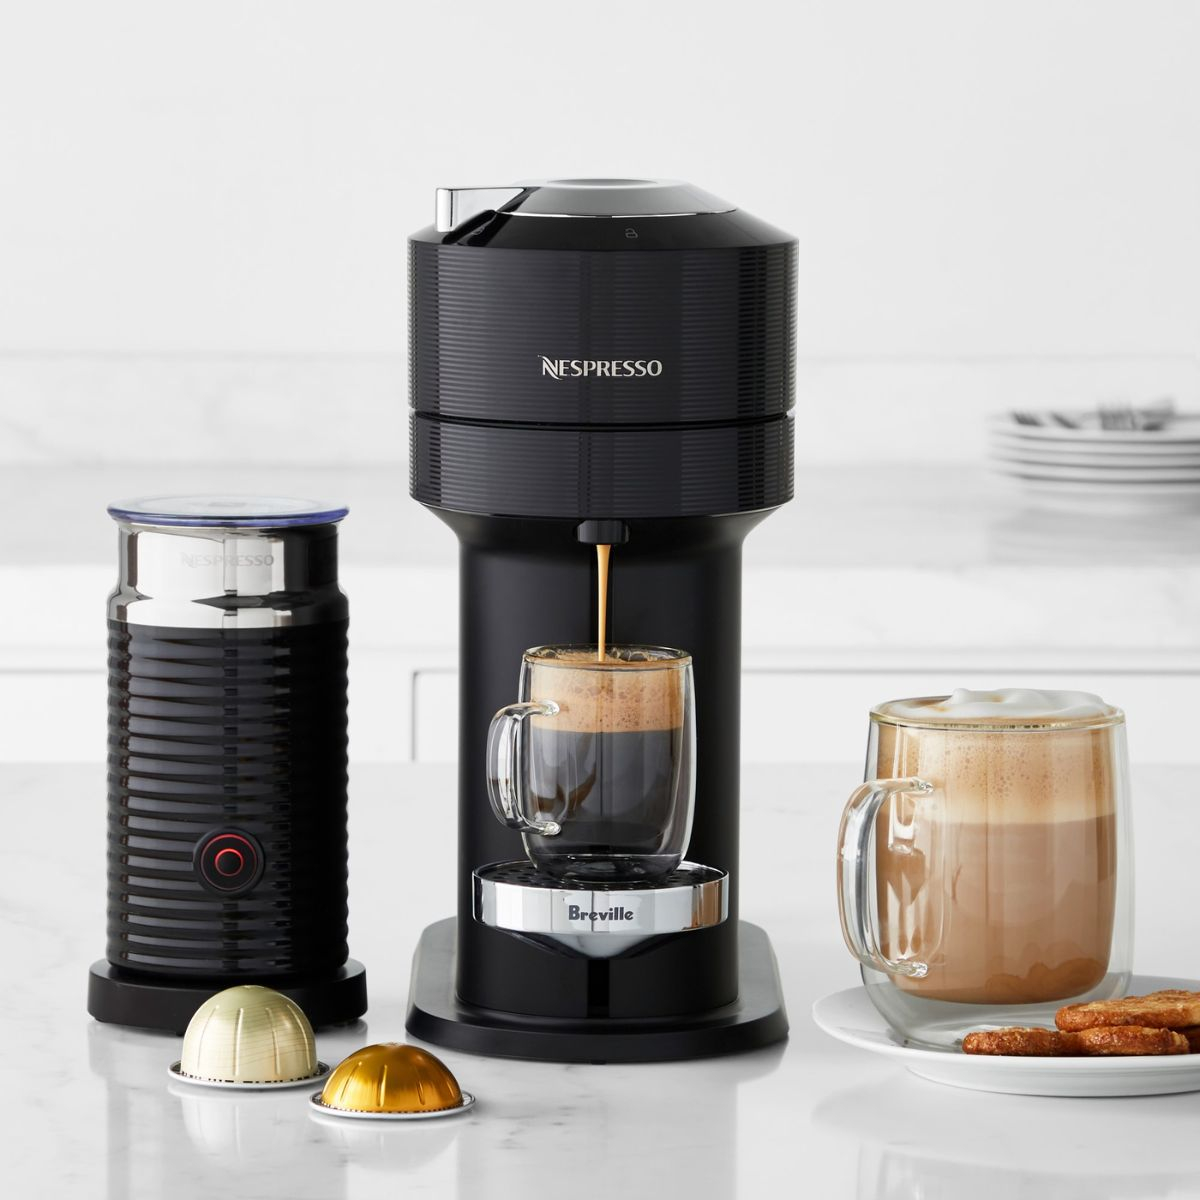 Sale Alert: Nespresso Vertuo Next Coffee Machine